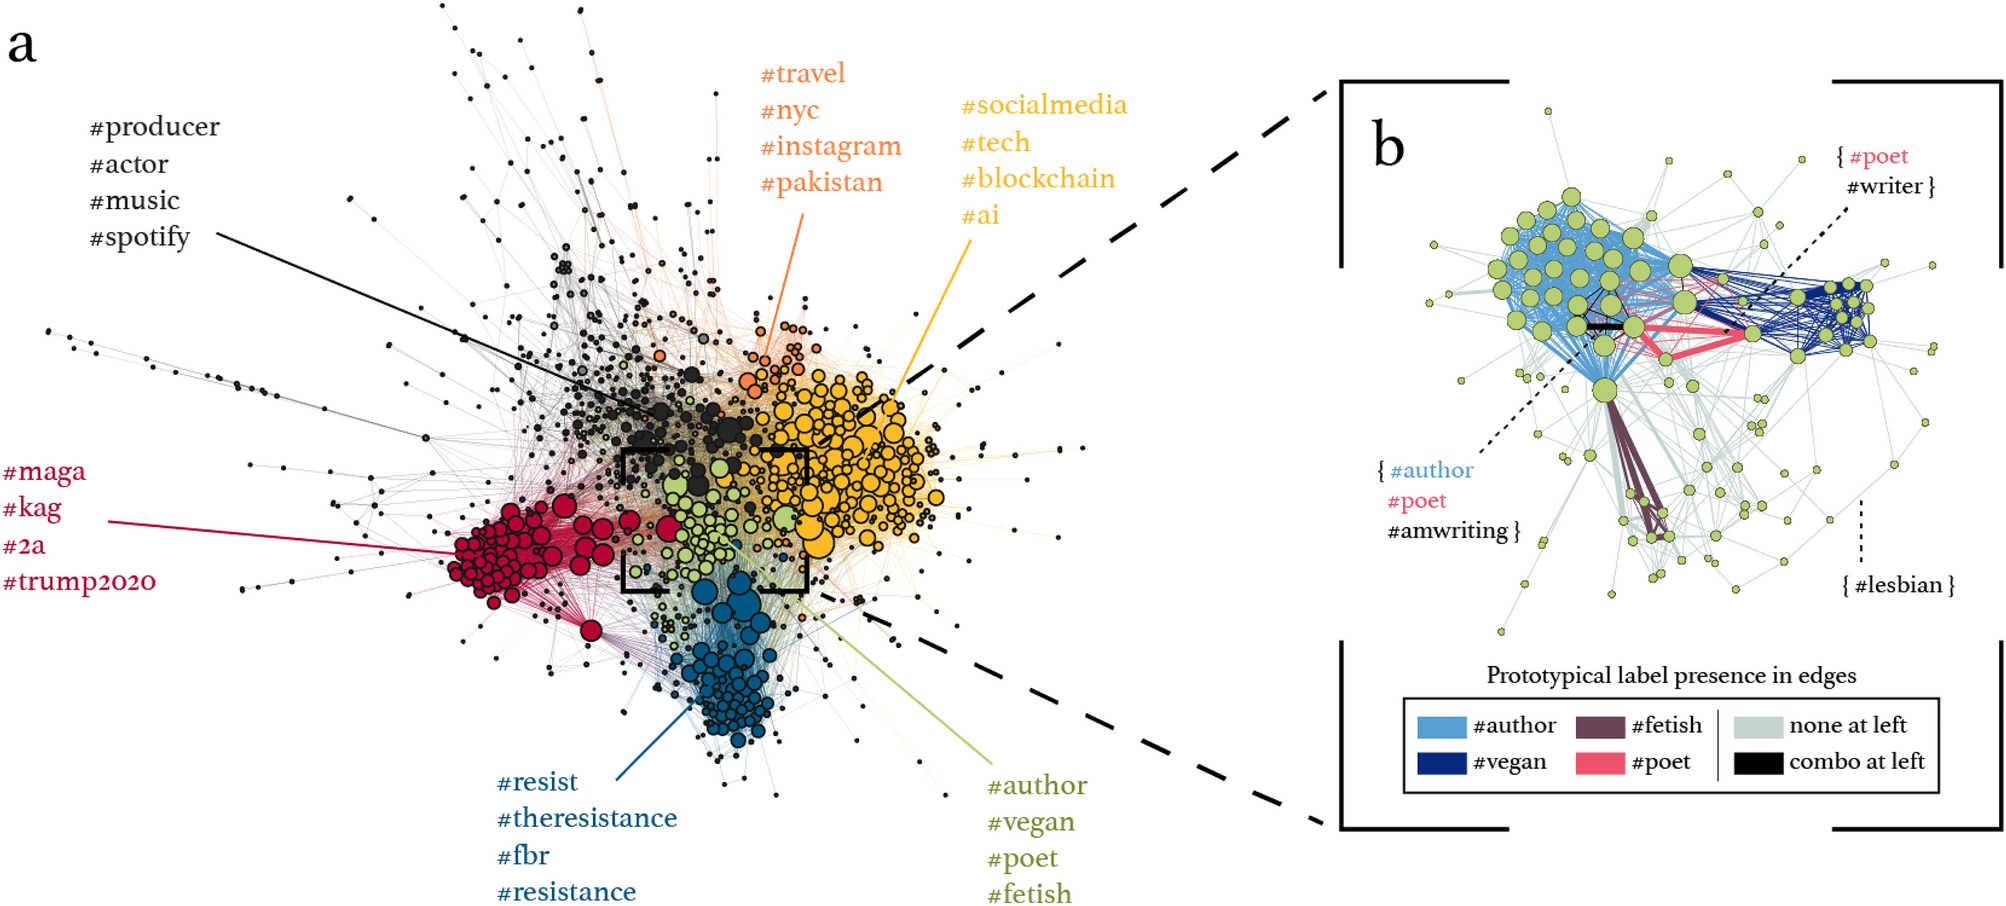 UPDATE: Data Visualization of BTS Twitter Engagement (June 2014